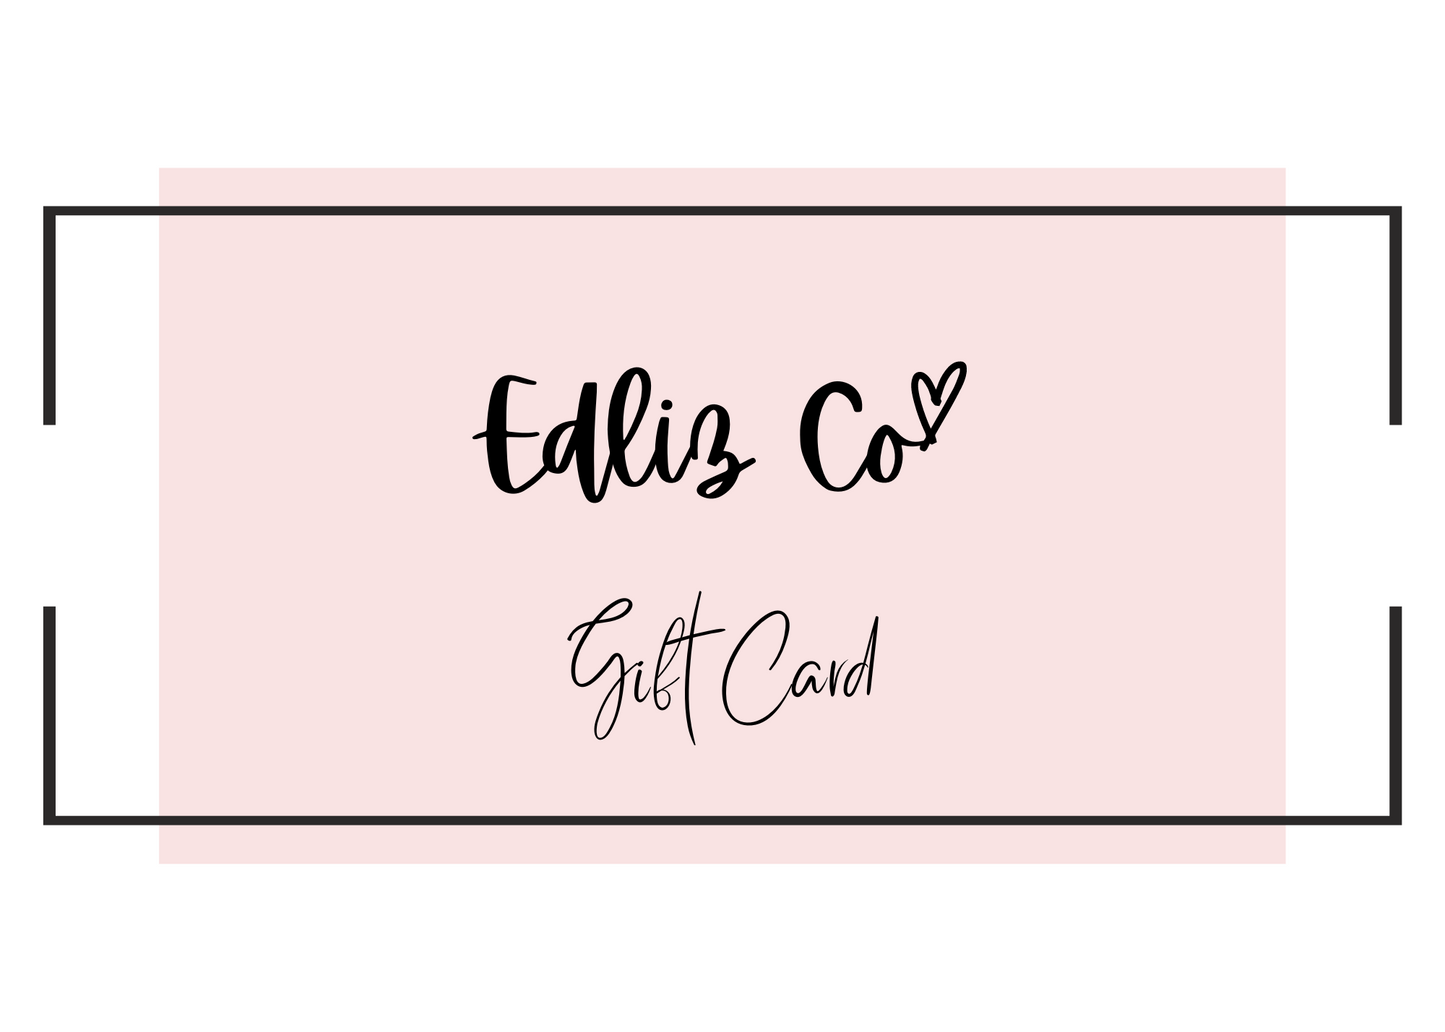 Edliz Co Gift Card